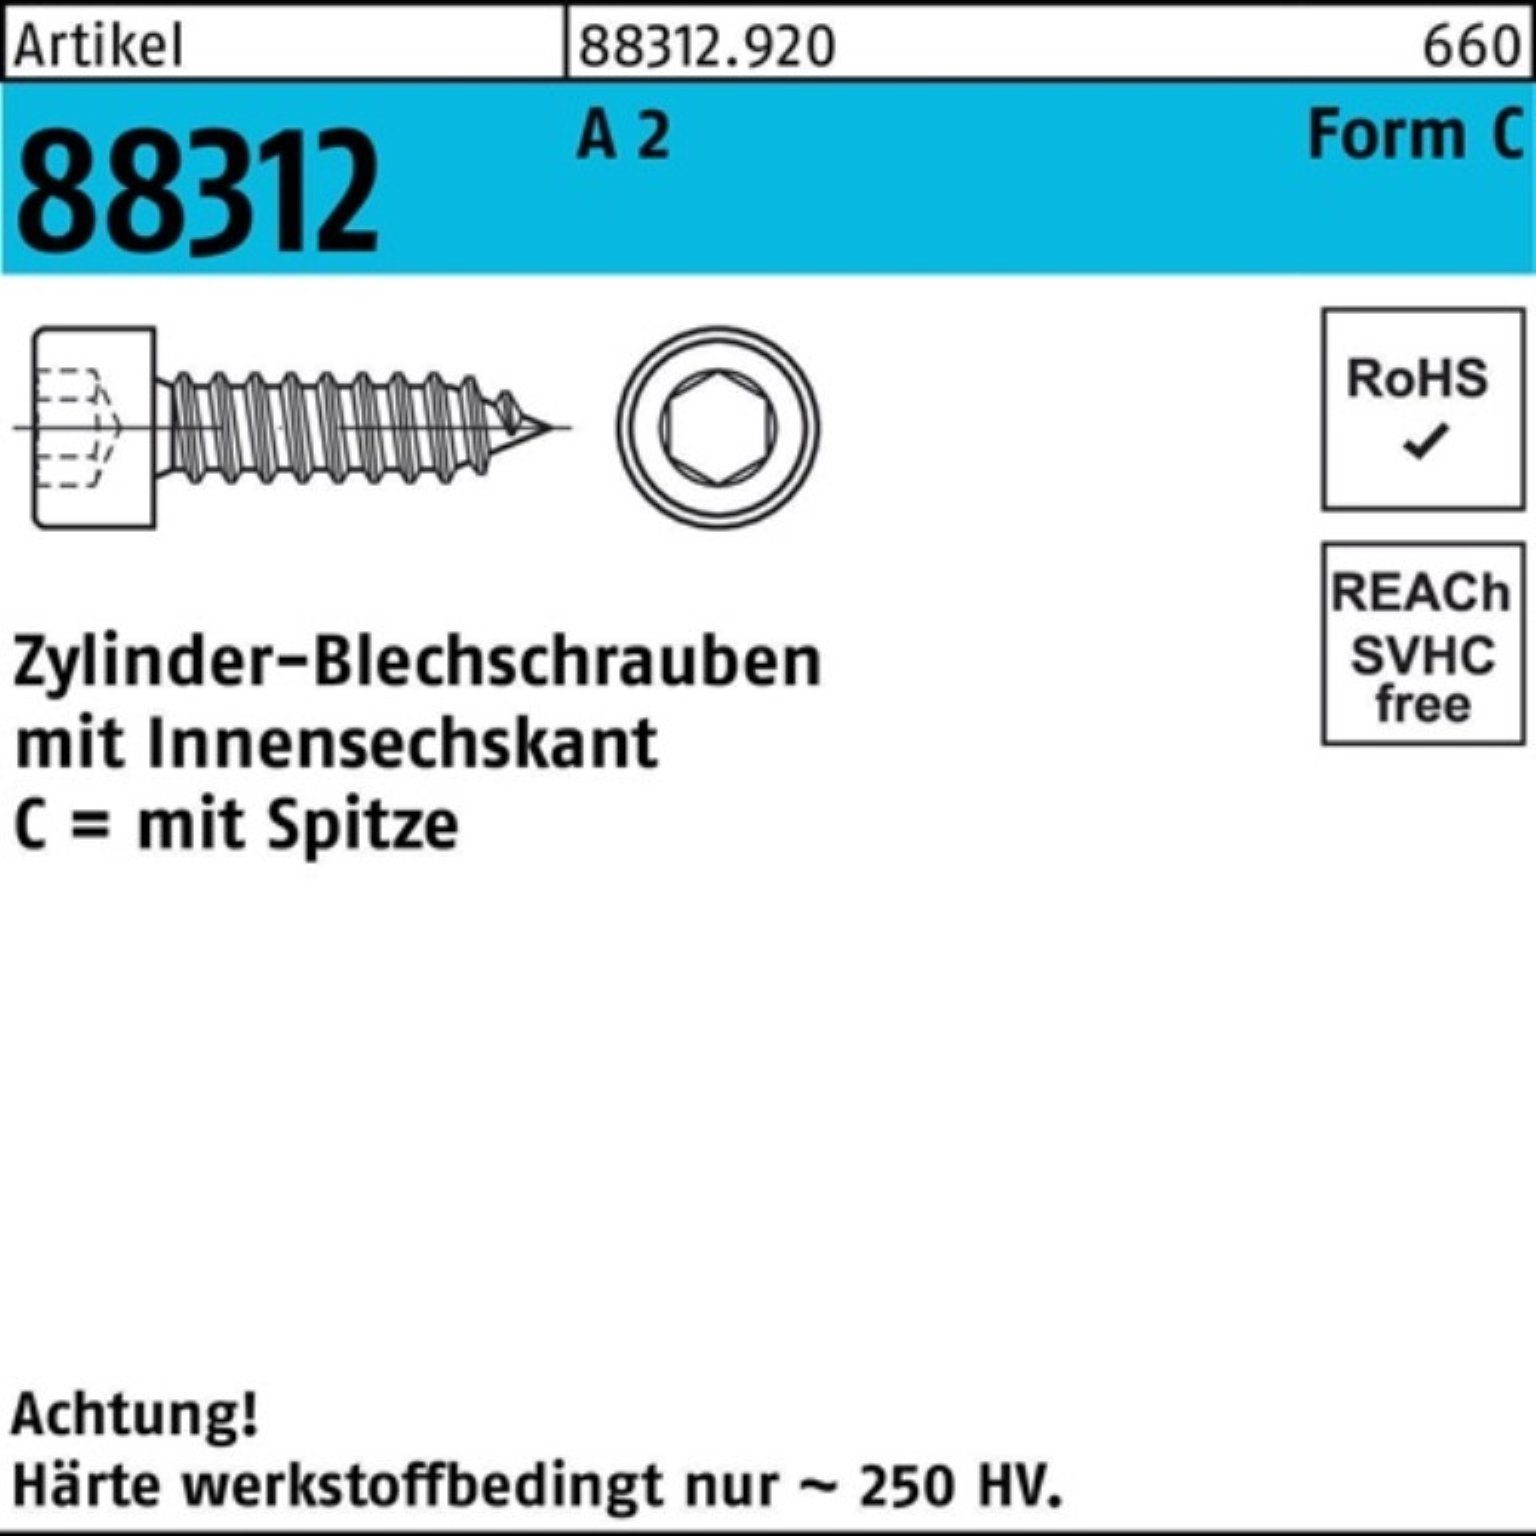 Reyher Blechschraube 200er Pack Zylinderblechschraube R 88312 Spitze/Innen-6kt C 6,3x 38 A